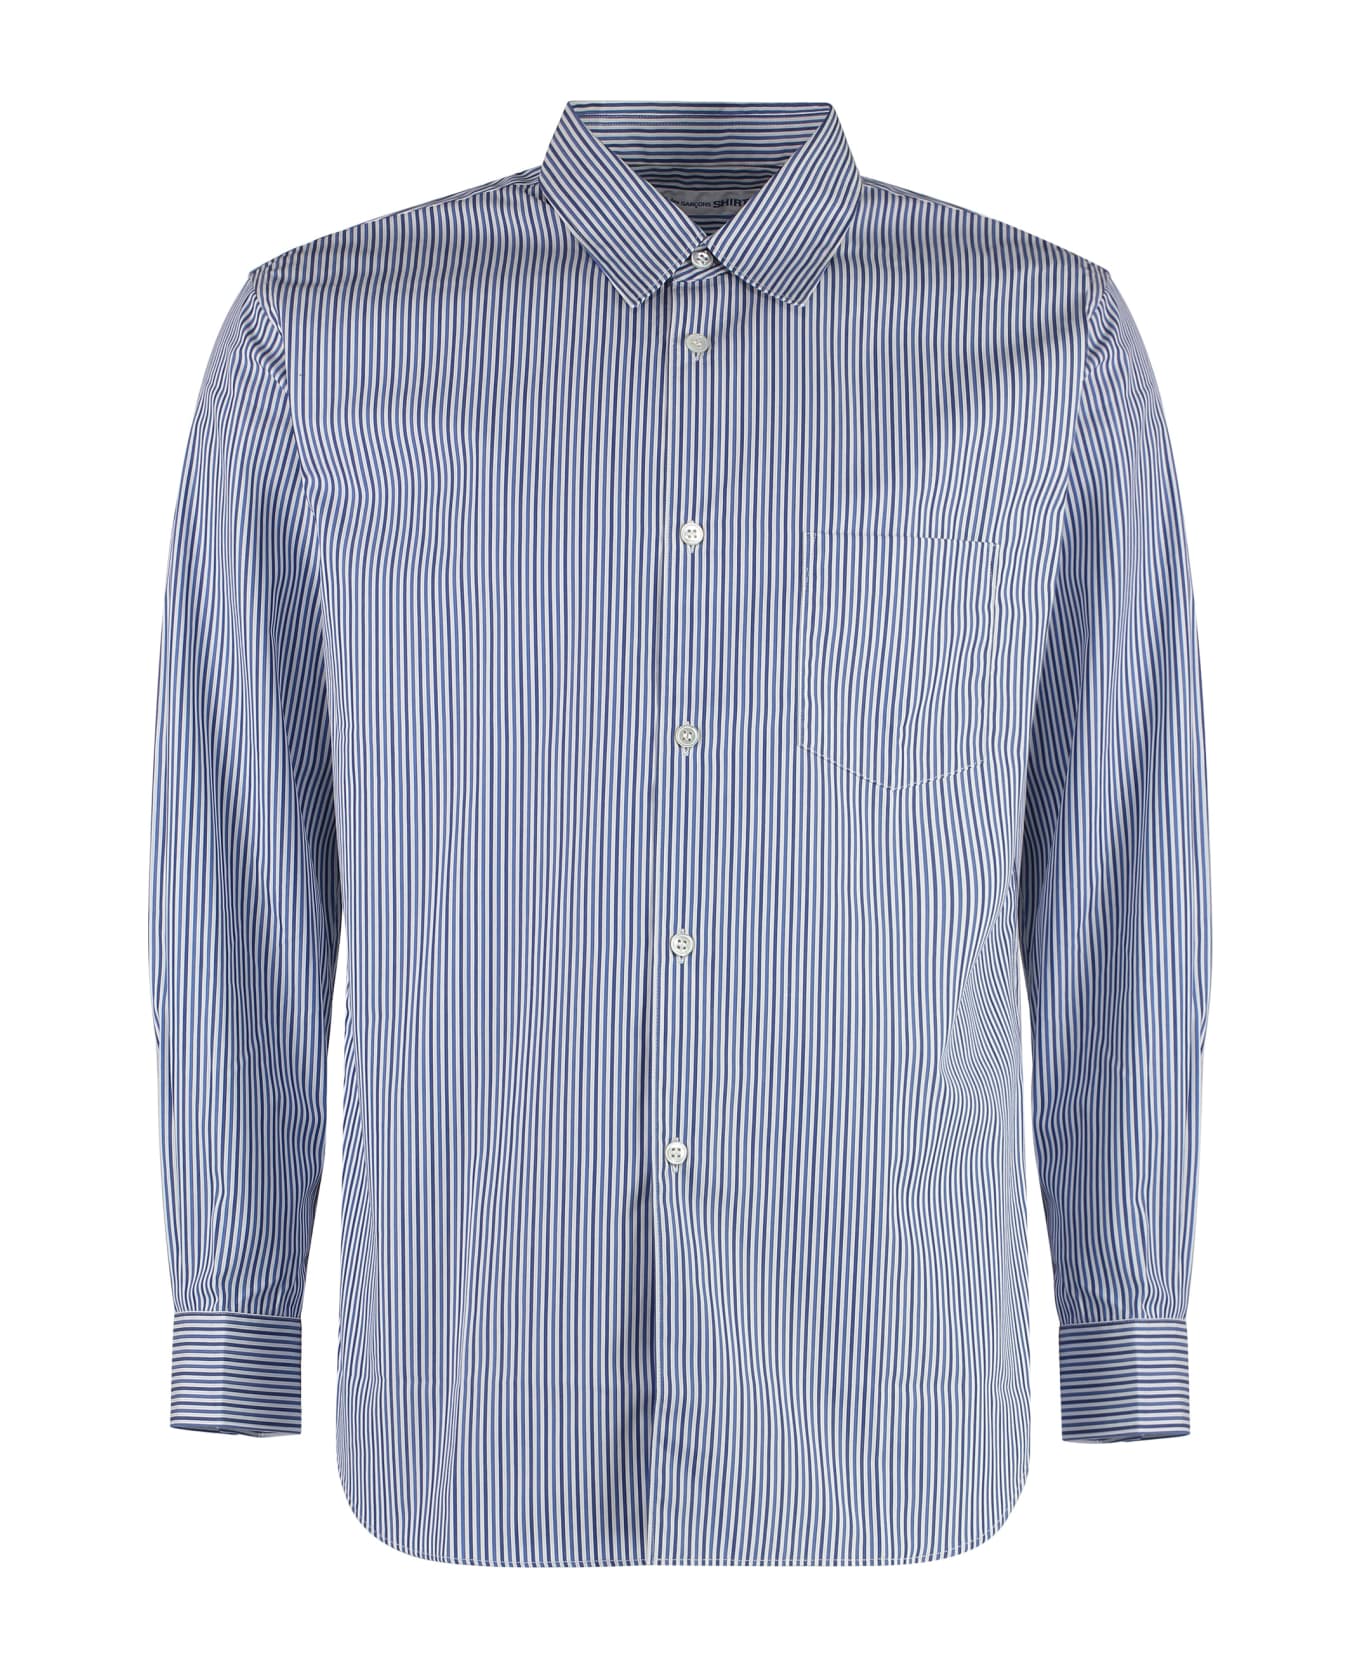 Comme des Garçons Shirt Striped Cotton Shirt - blue